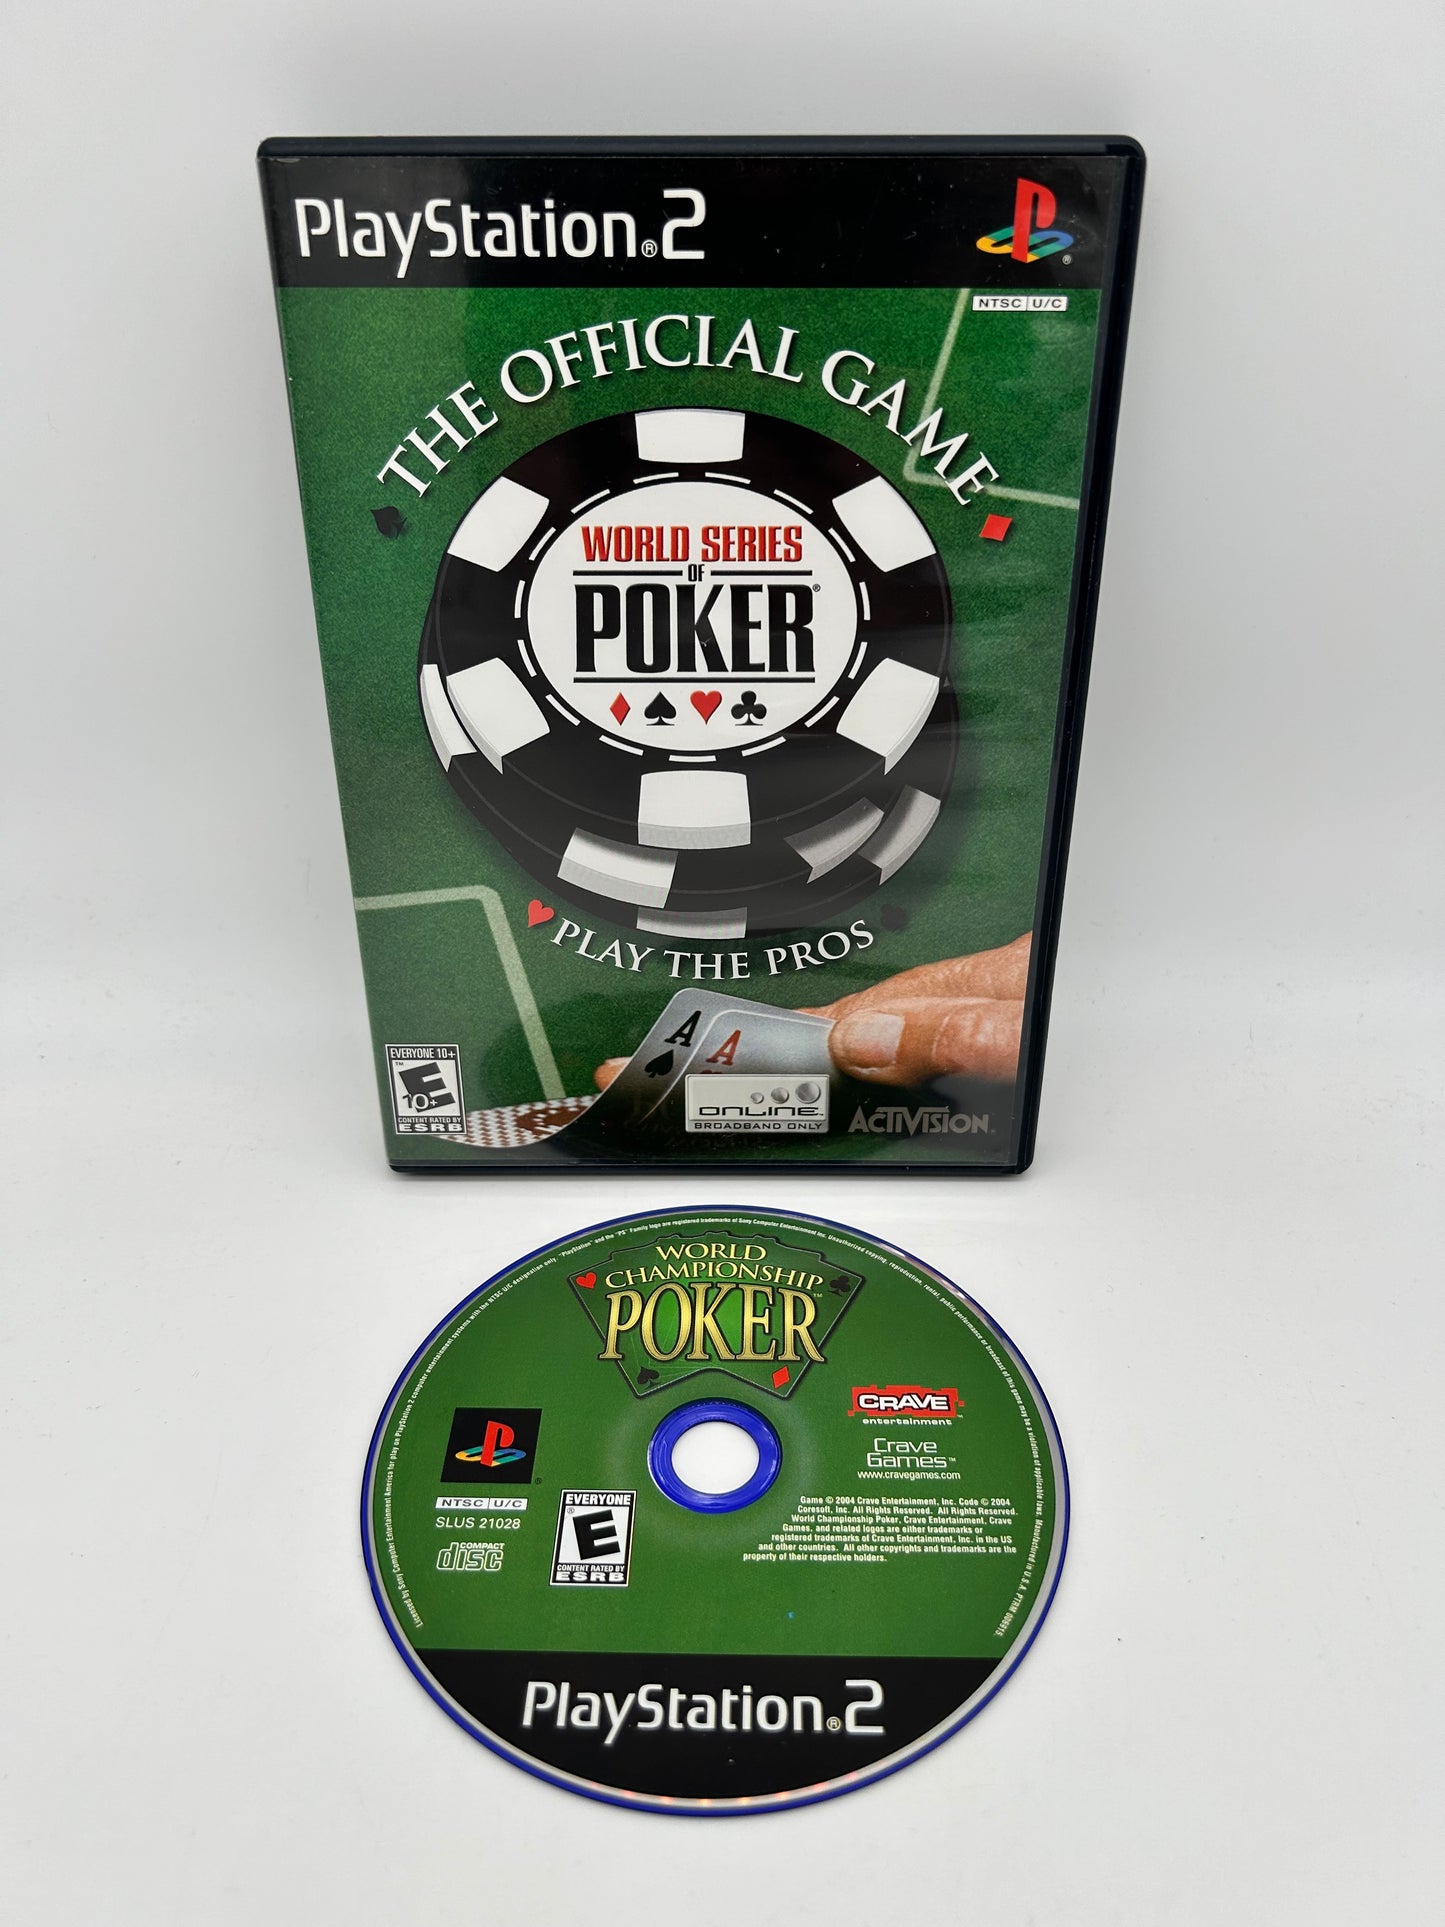 PiXEL-RETRO.COM : SONY PLAYSTATION 2 (PS2) COMPLET CIB BOX MANUAL GAME NTSC WORLD SERIES POKER PLAY THE PROS